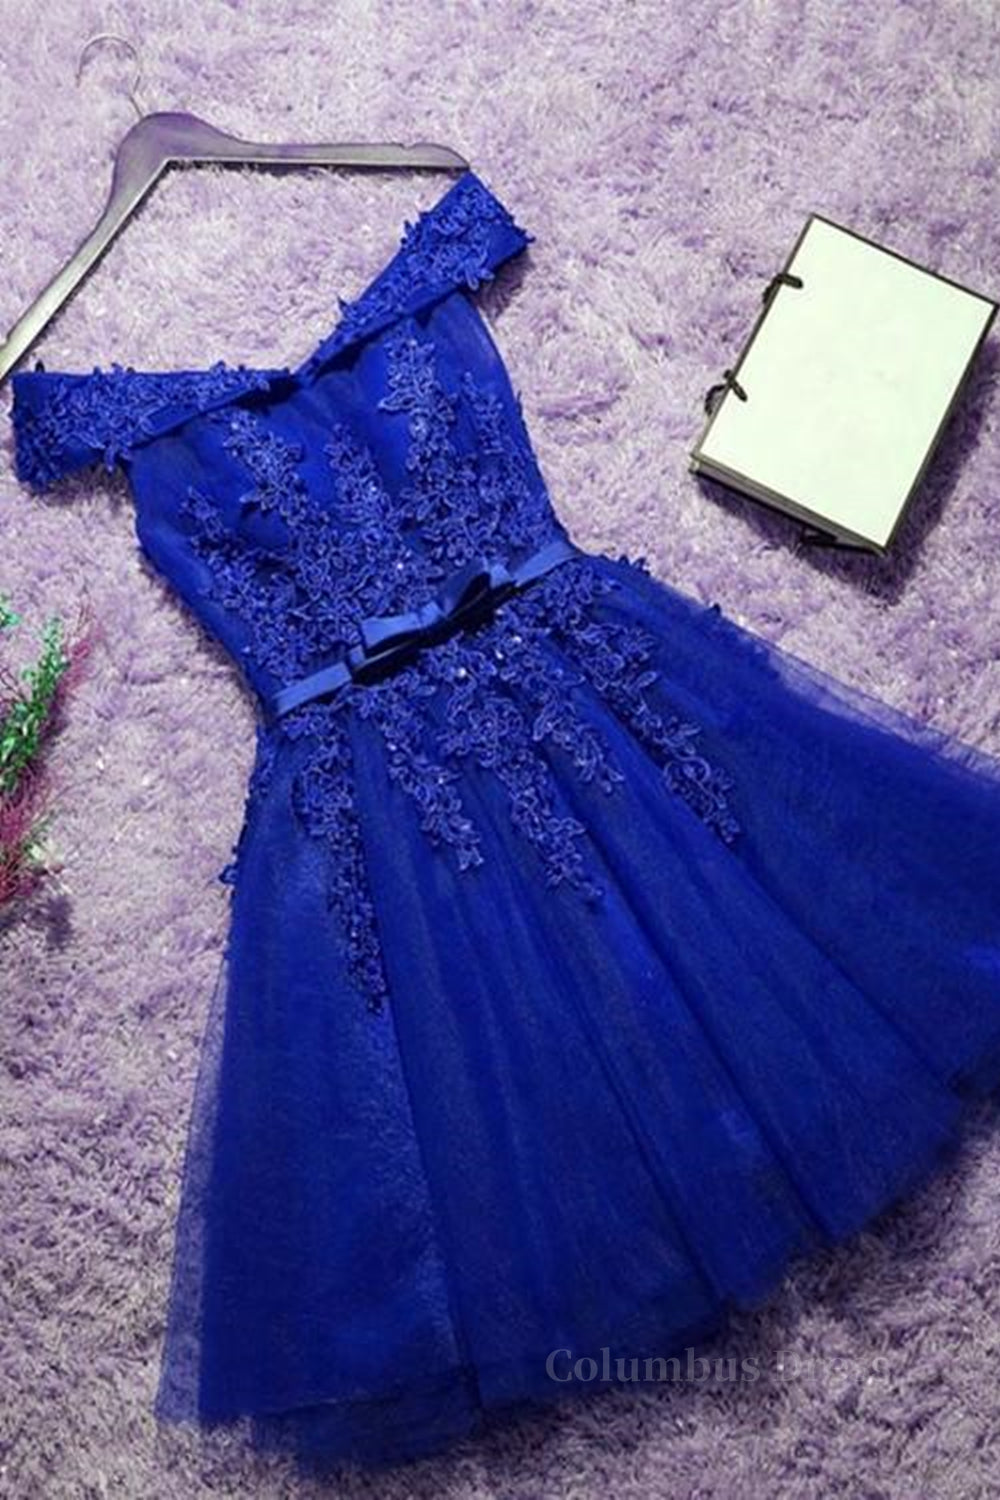 Off the Shoulder Blue Lace Corset Prom Dresses, Off Shoulder Blue Corset Homecoming Dresses, Short Blue Lace Corset Formal Evening Dresses outfit, Formal Dress Trends